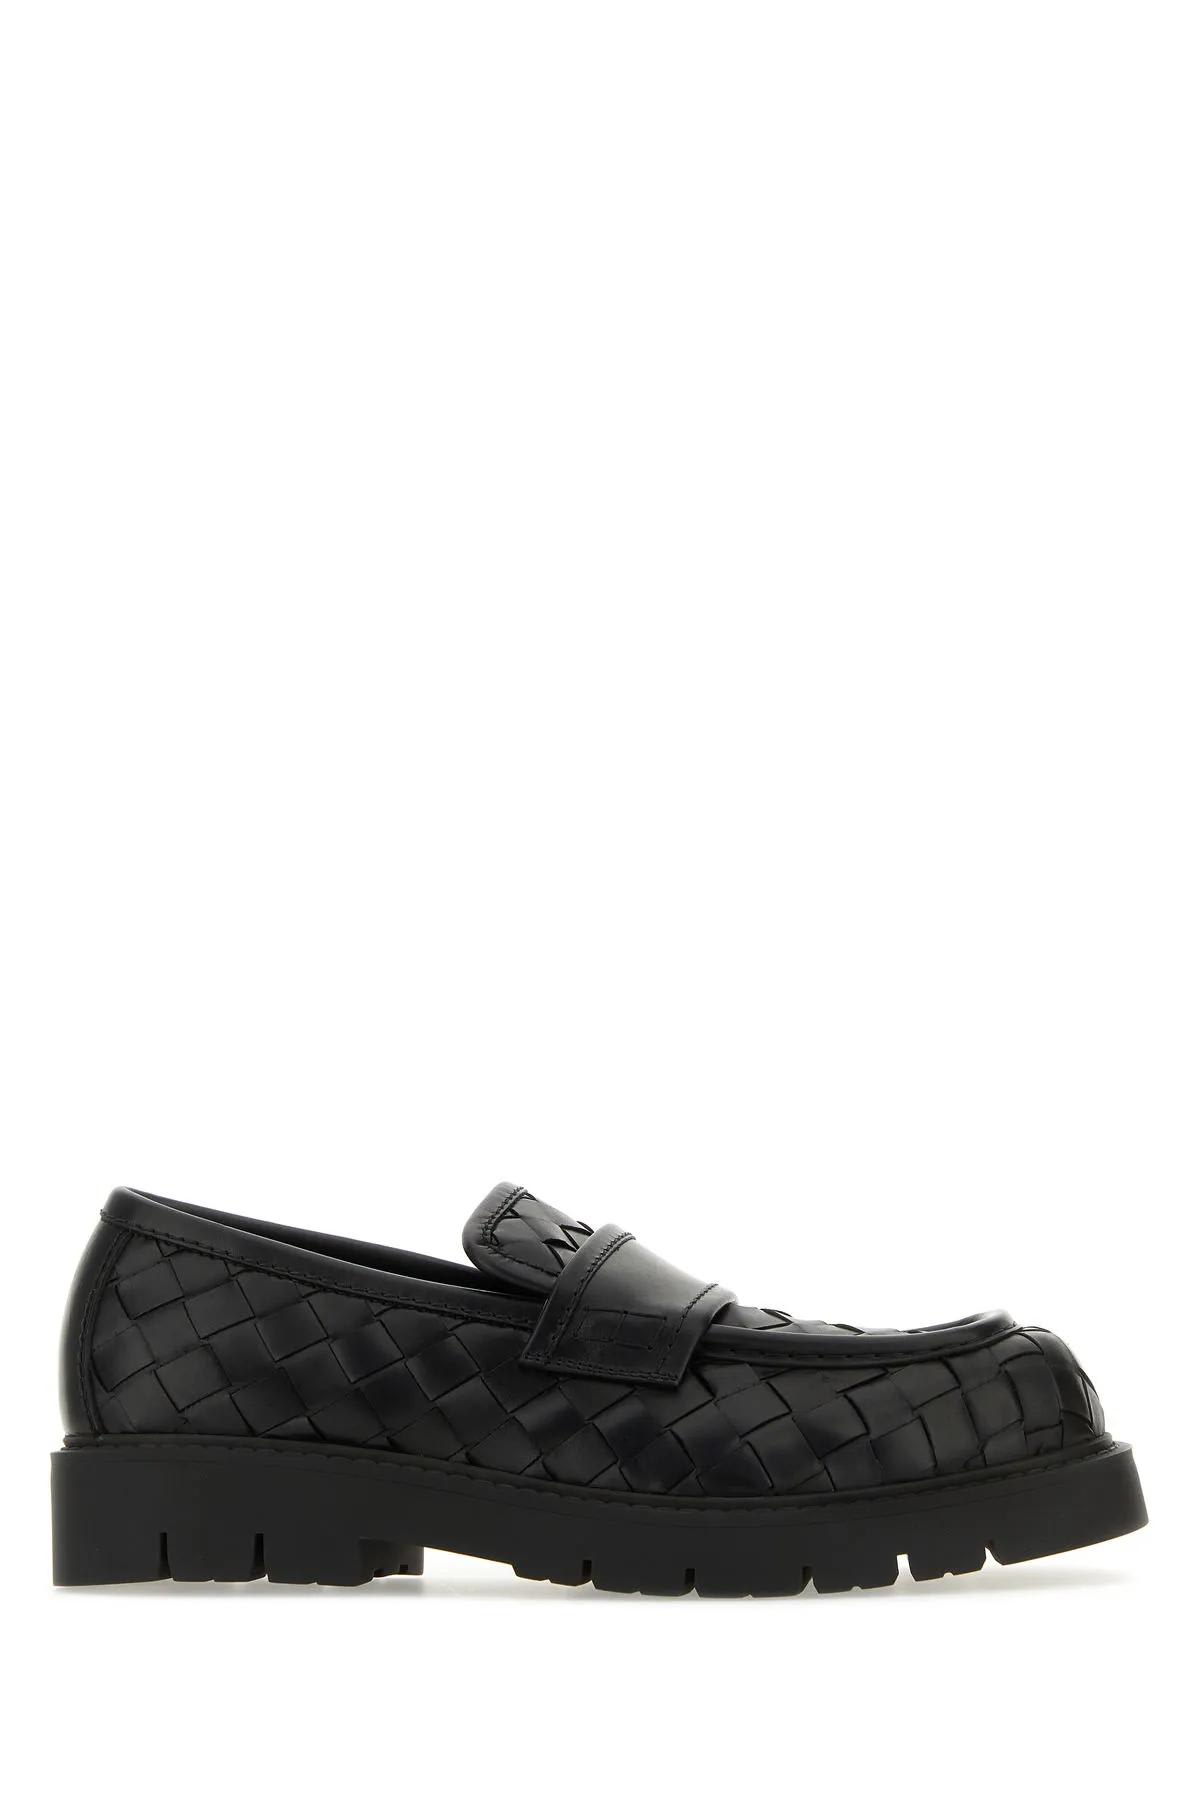 Bottega Veneta Black Leather Loafers